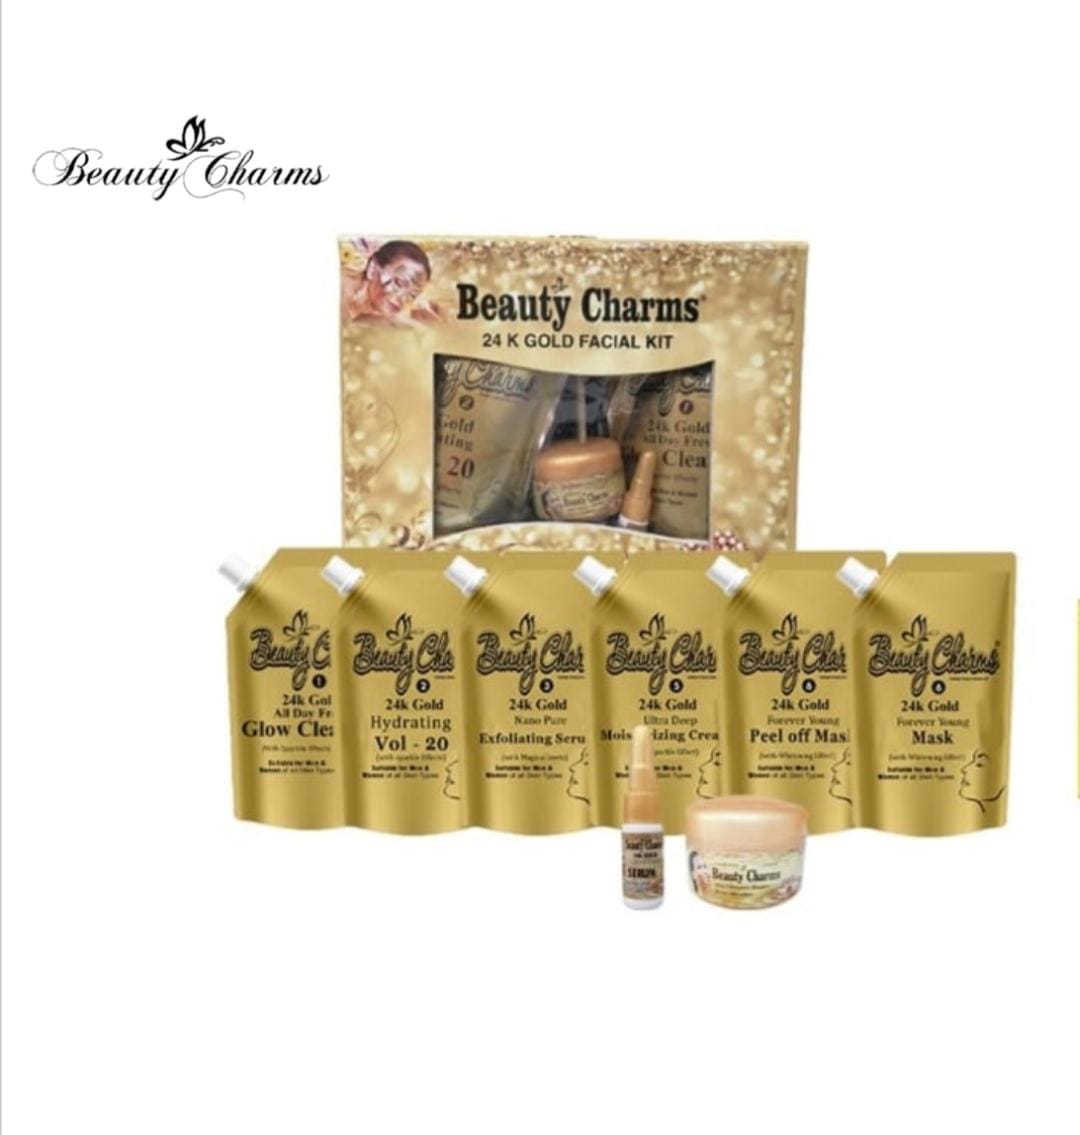 Beauty charms gold facial kit 